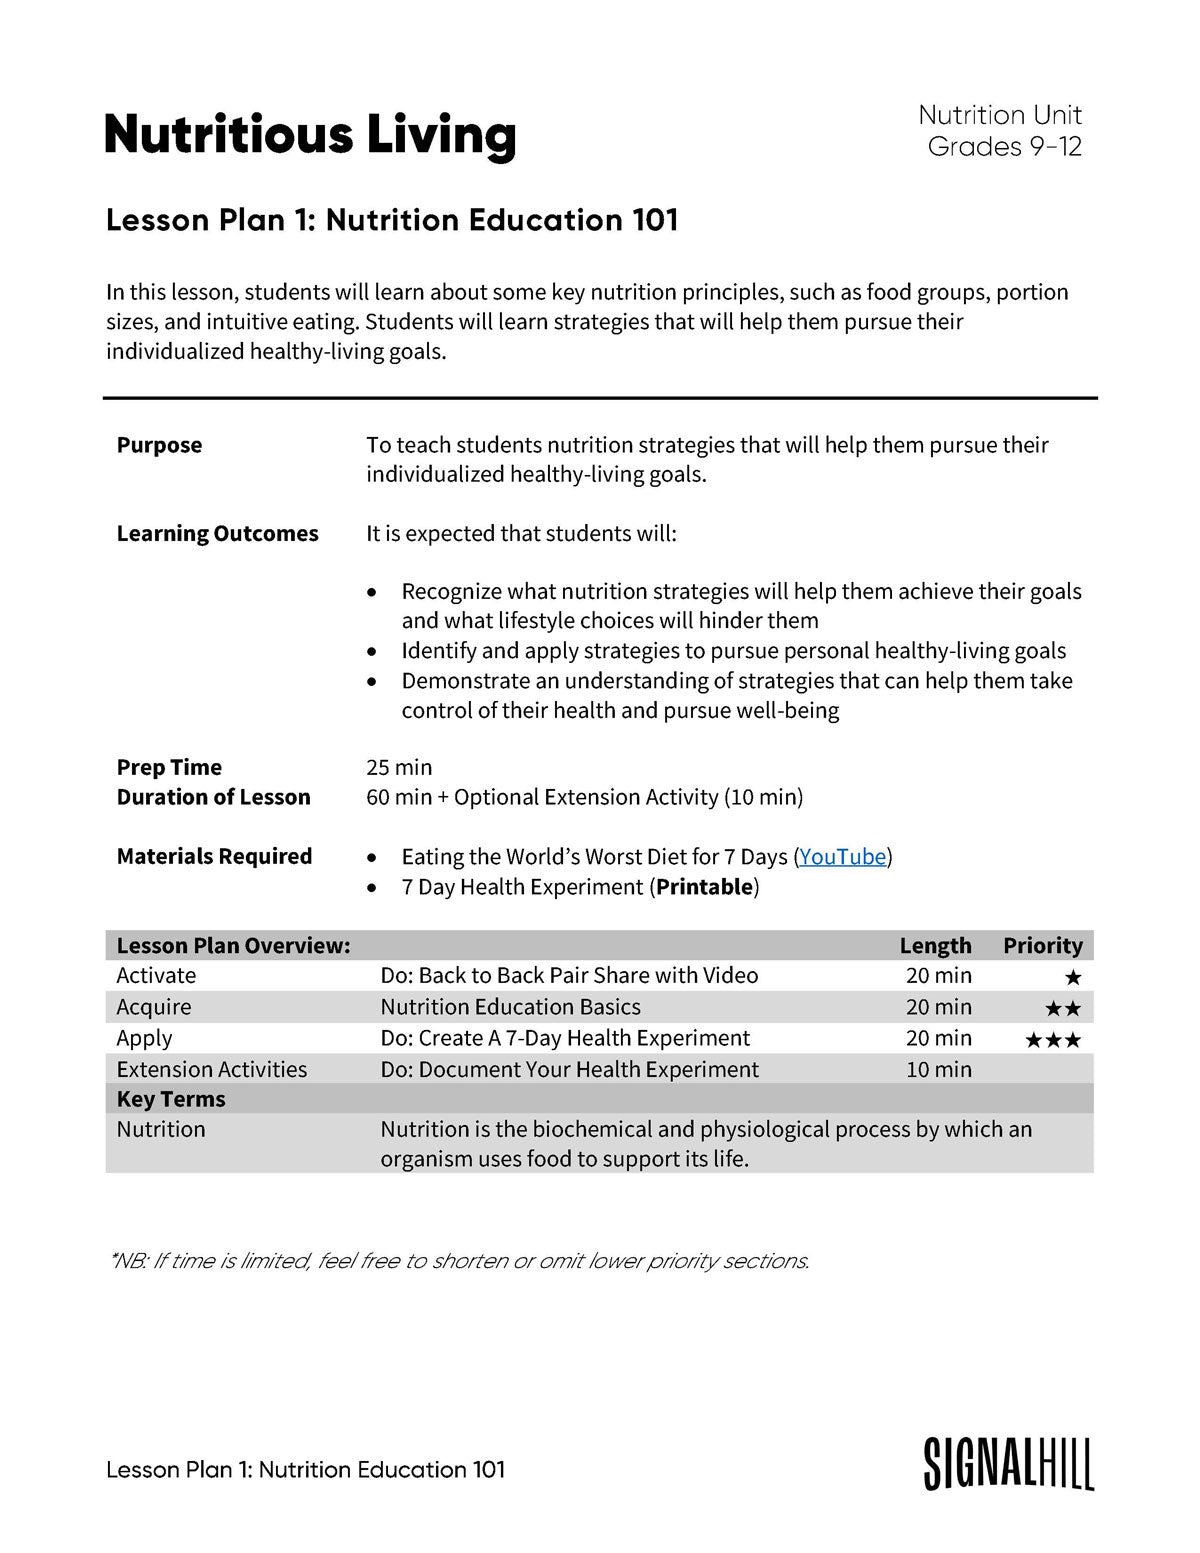 Lesson Plan 1: Nutrition Education 101